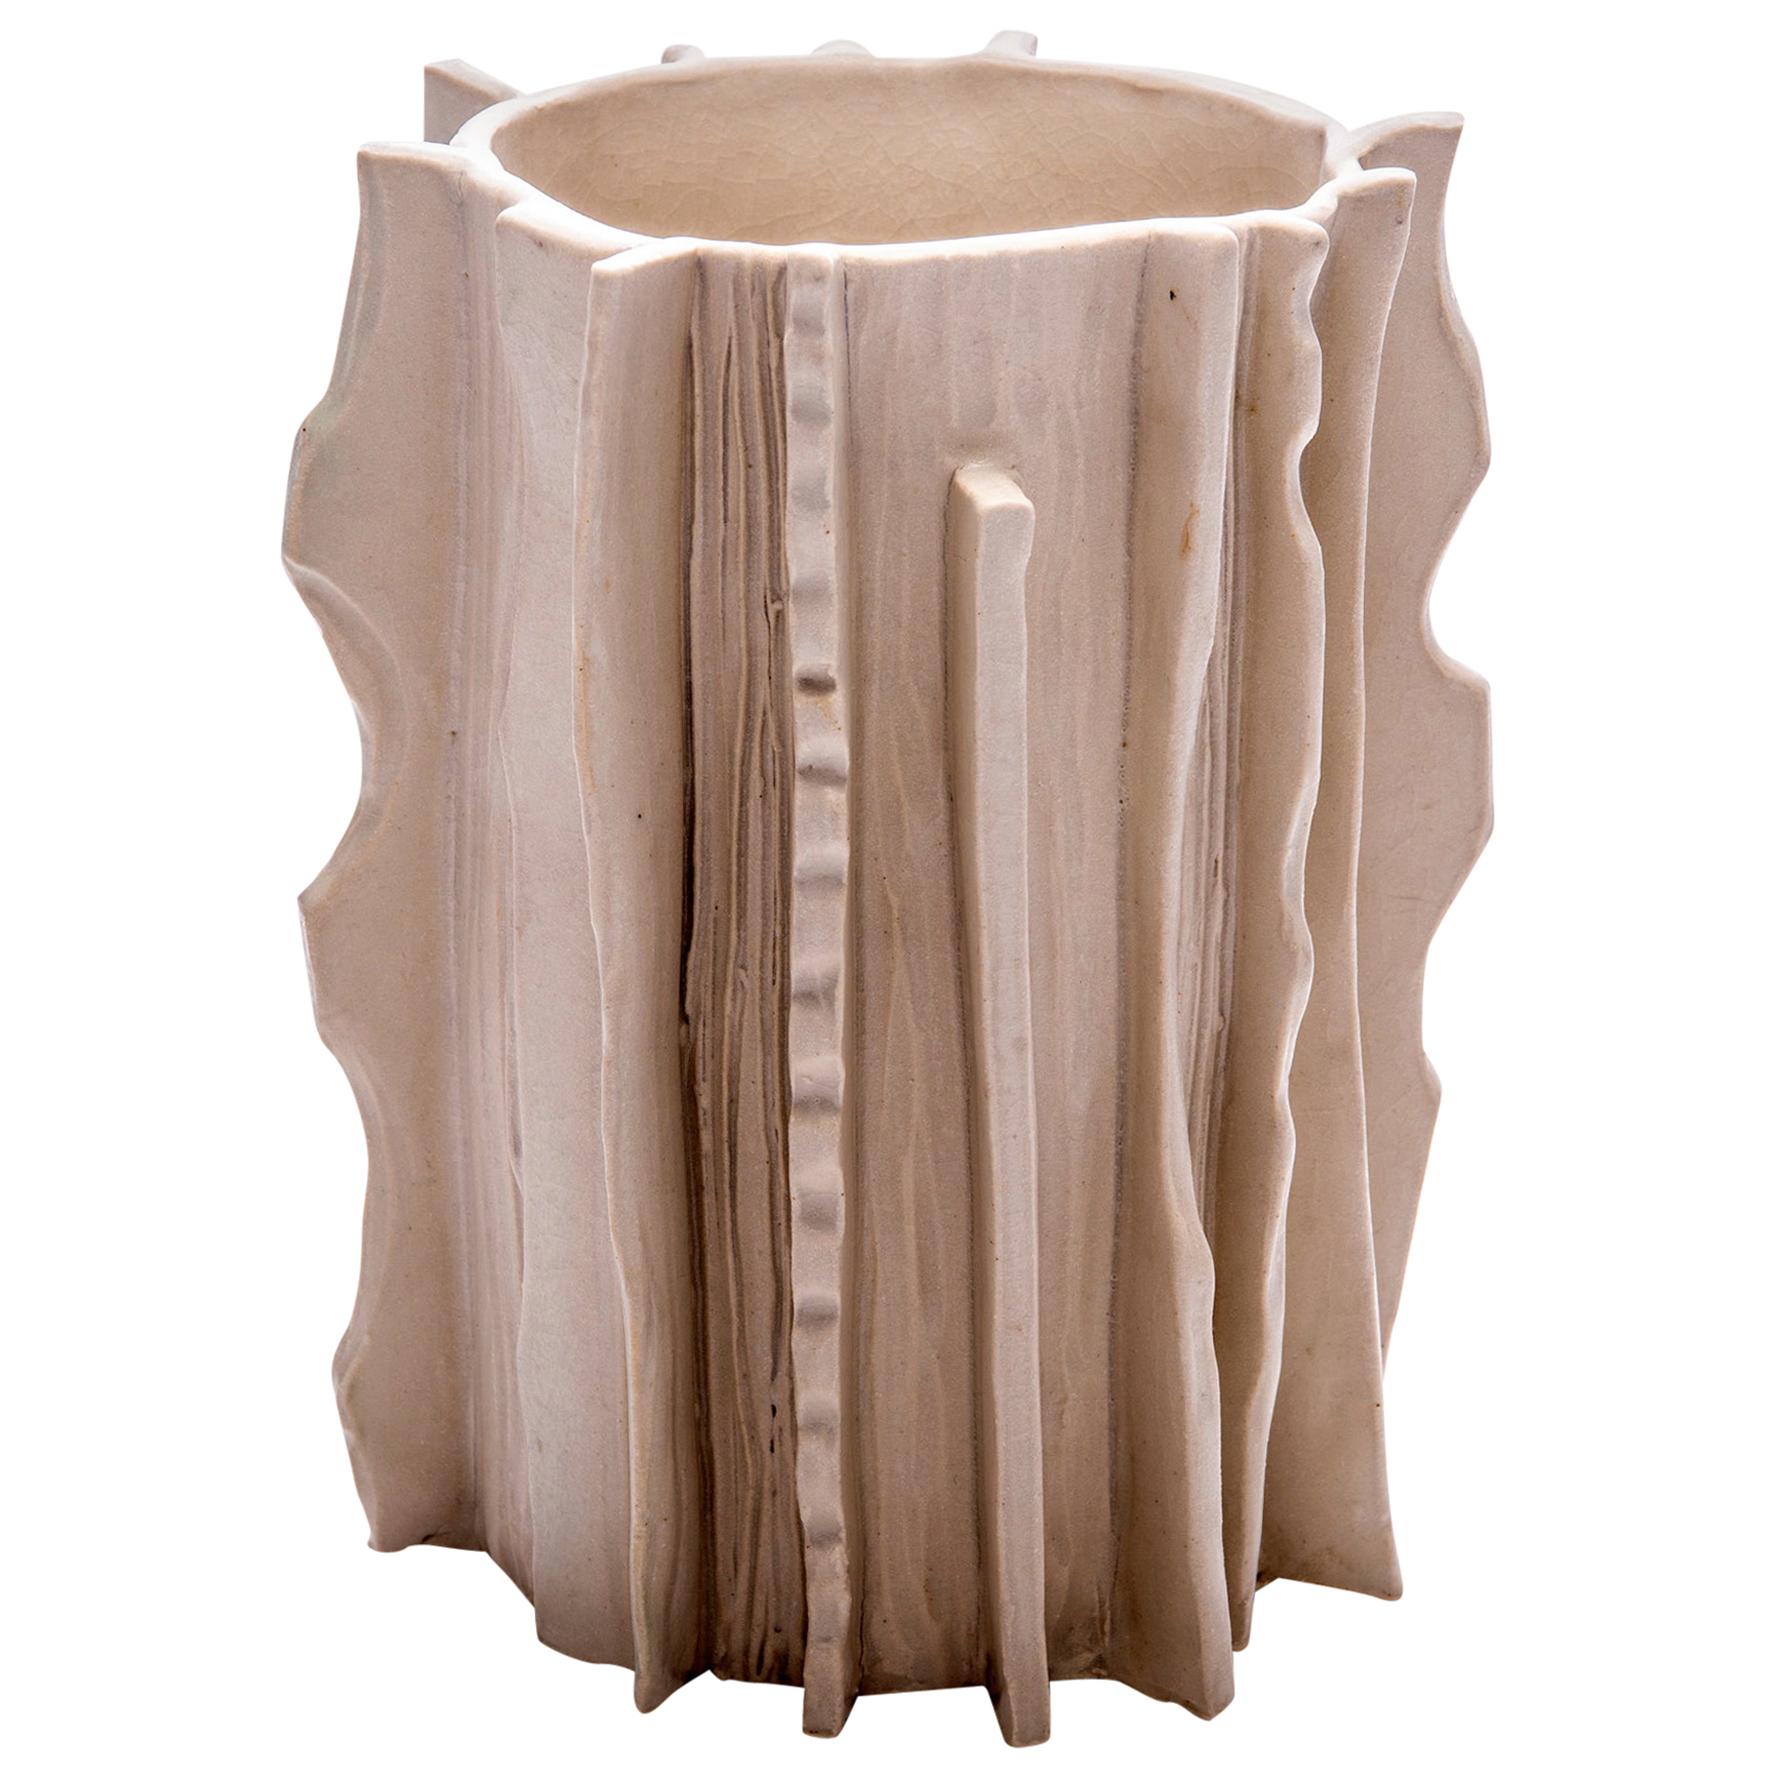 Vase Marcello en céramique émaillée de la collection Moderno de Trish DeMasi